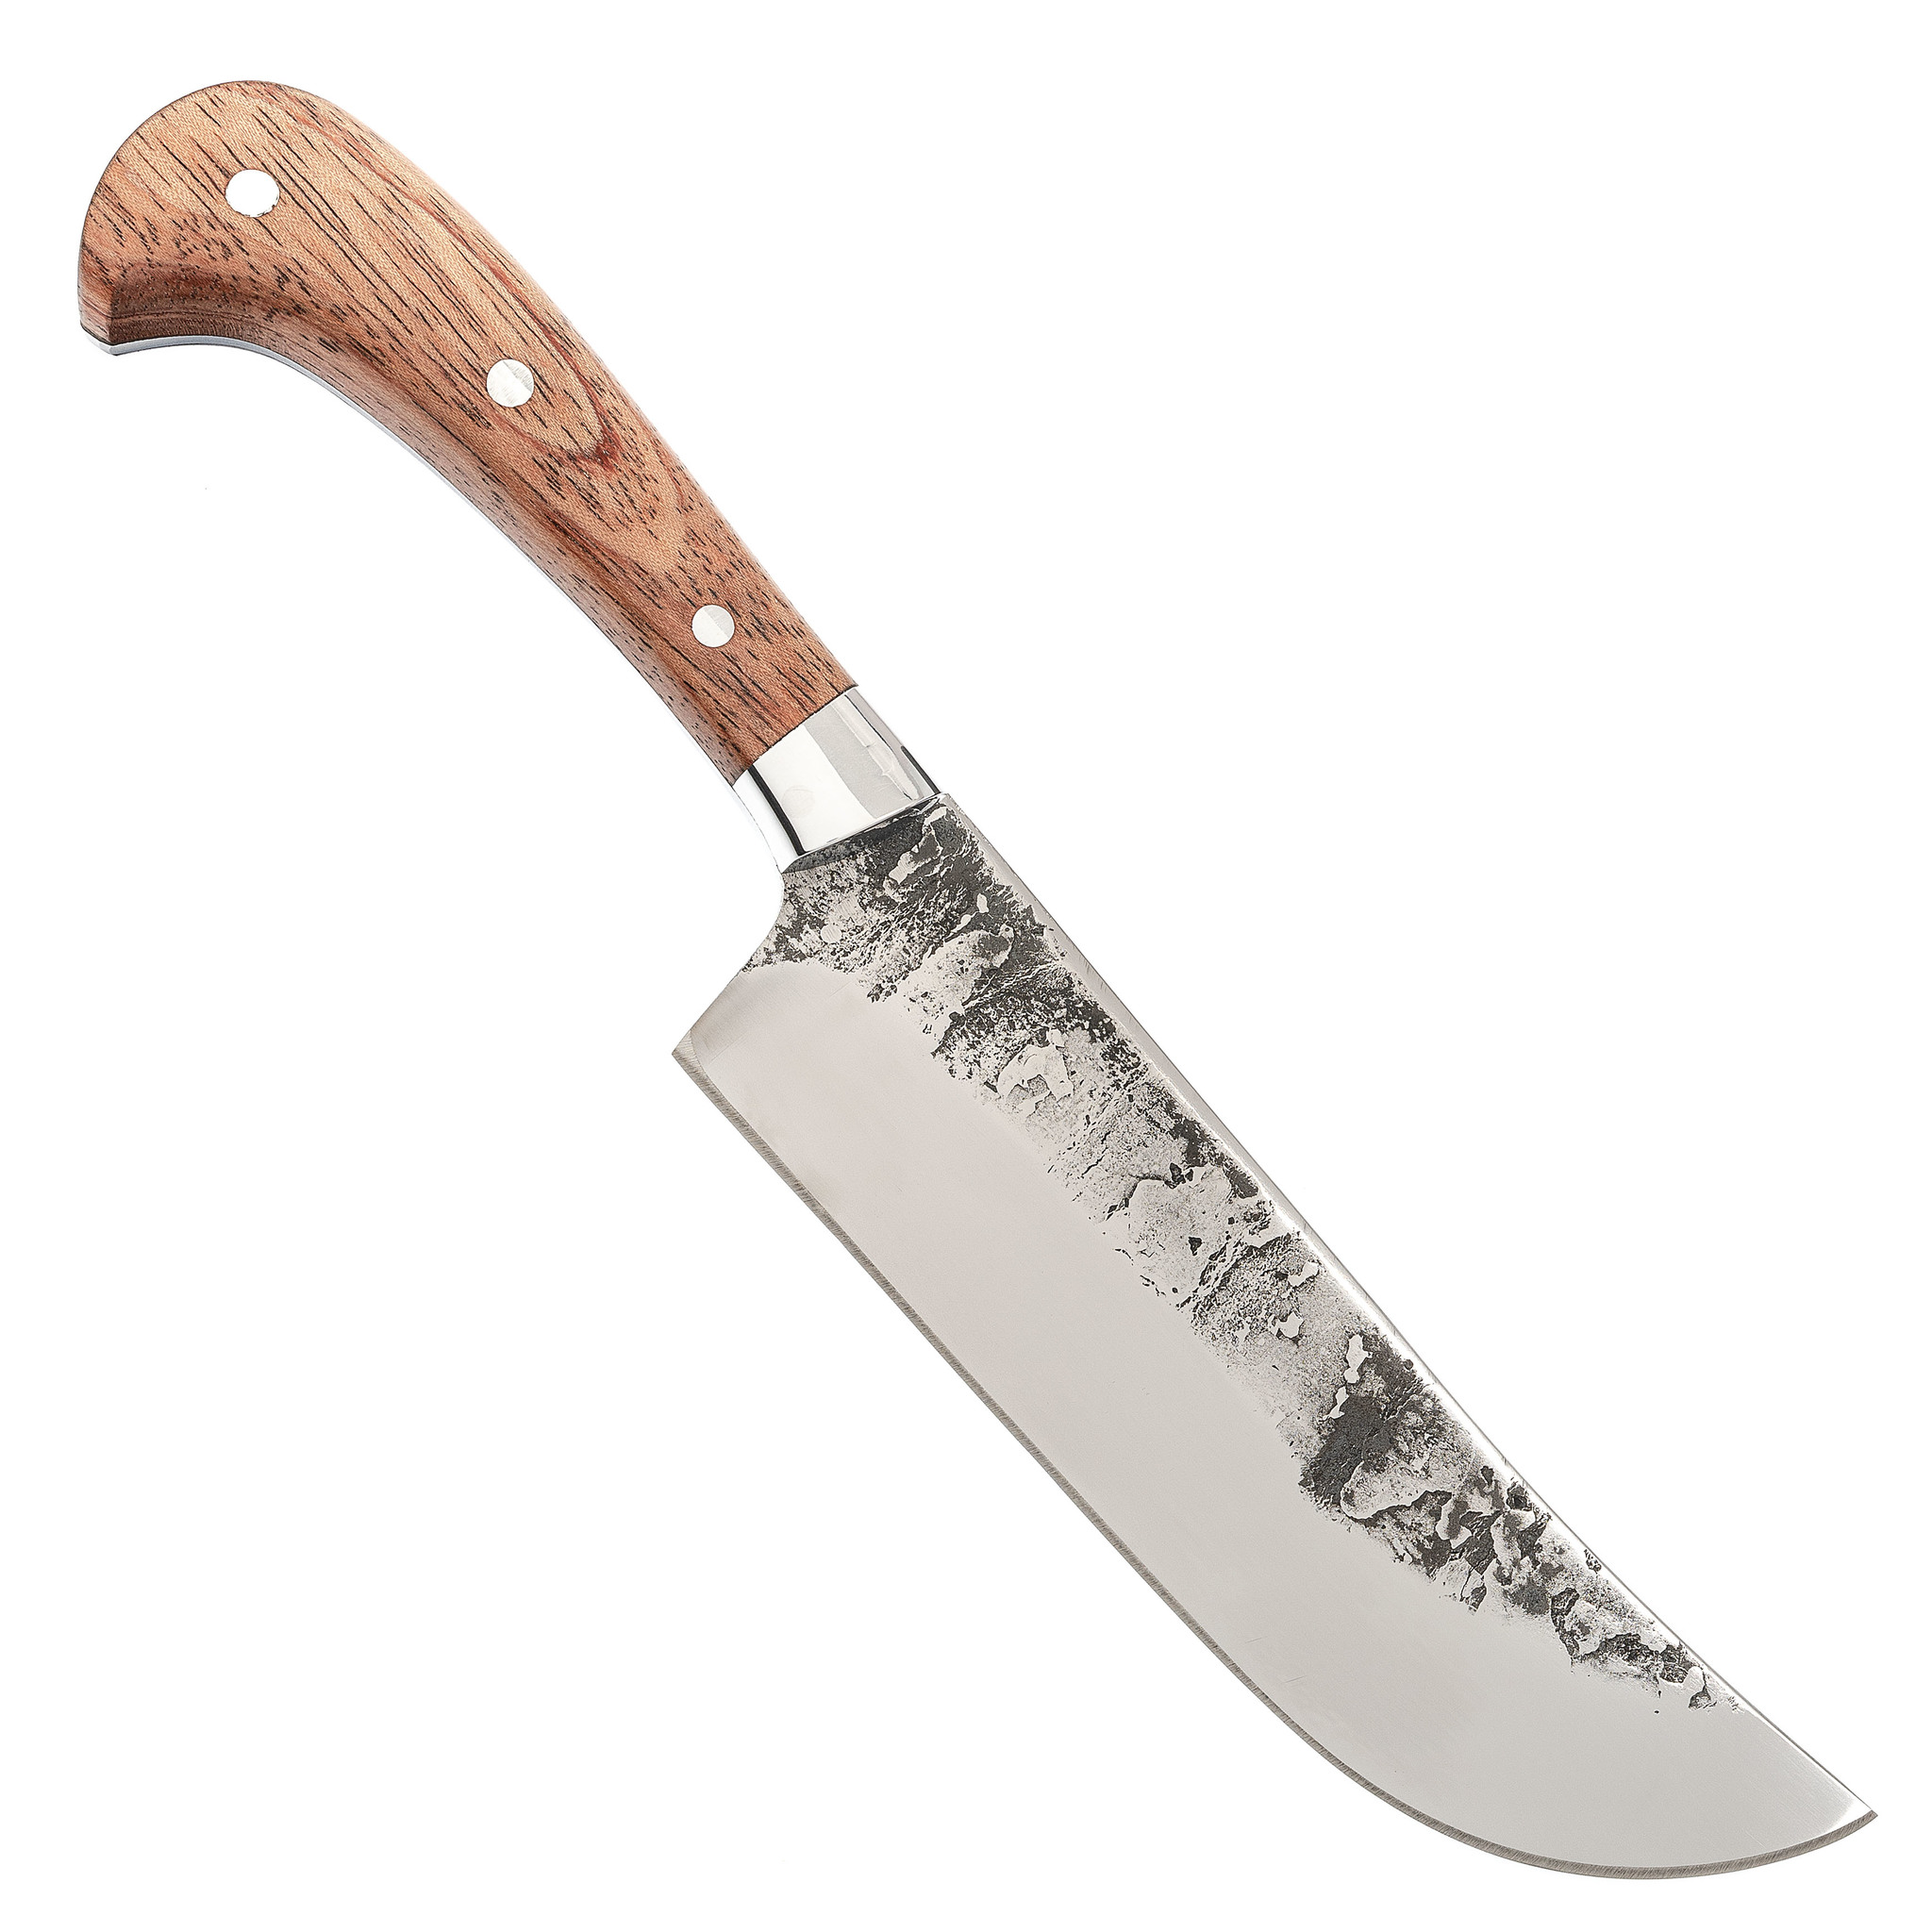 Нож кухонный MT-49 средний, кованная сталь 95х18, бубинго от Ножиков